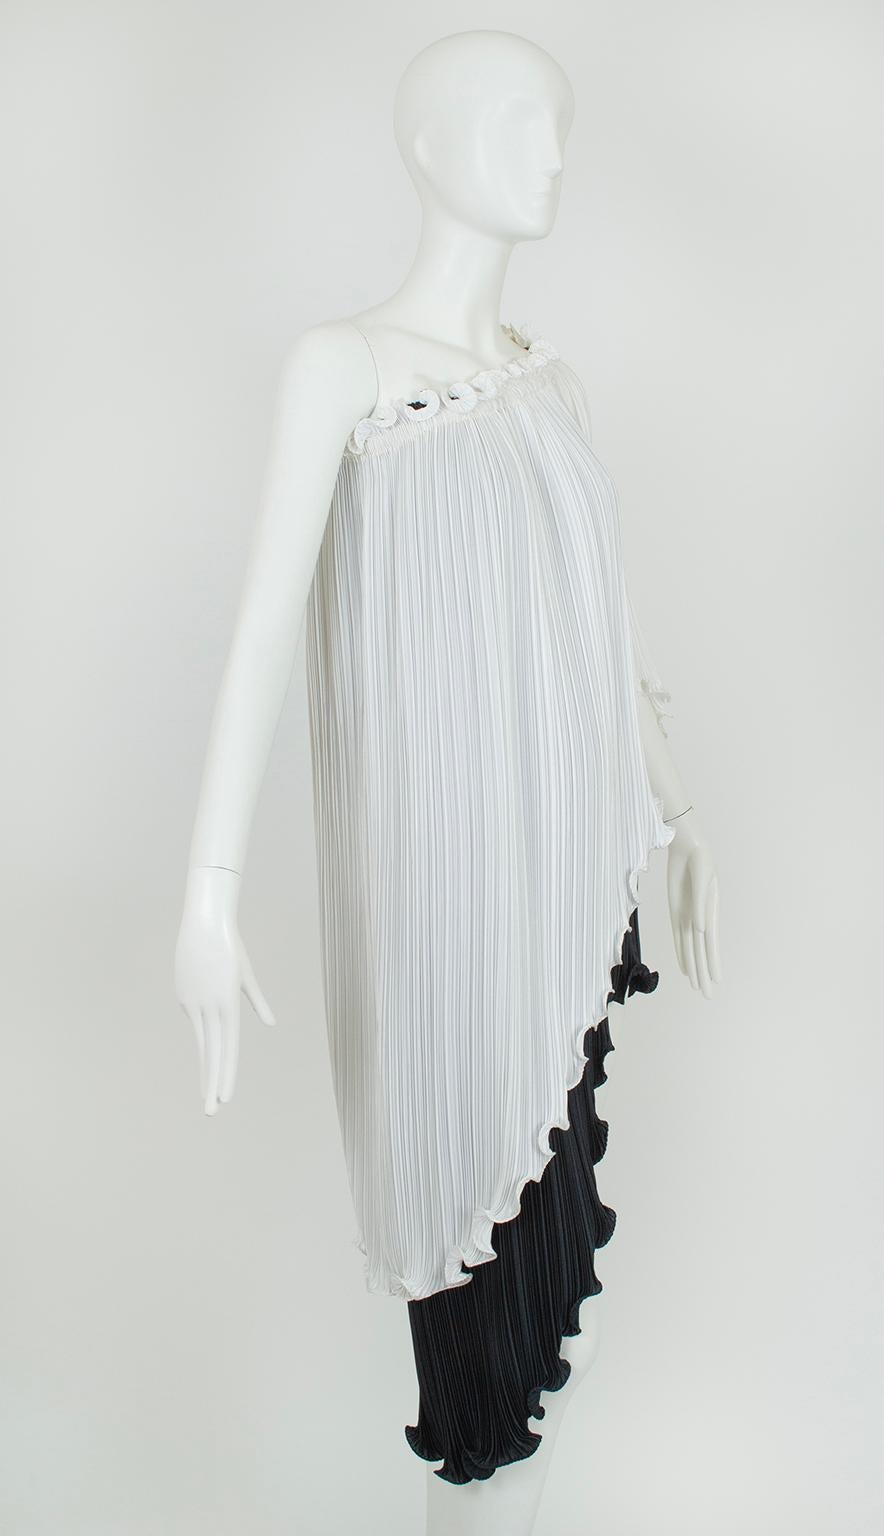 New Tarquin Ebker Black White Asymmetrical Delphos Dress w Provenance – S, 1978 In New Condition For Sale In Tucson, AZ